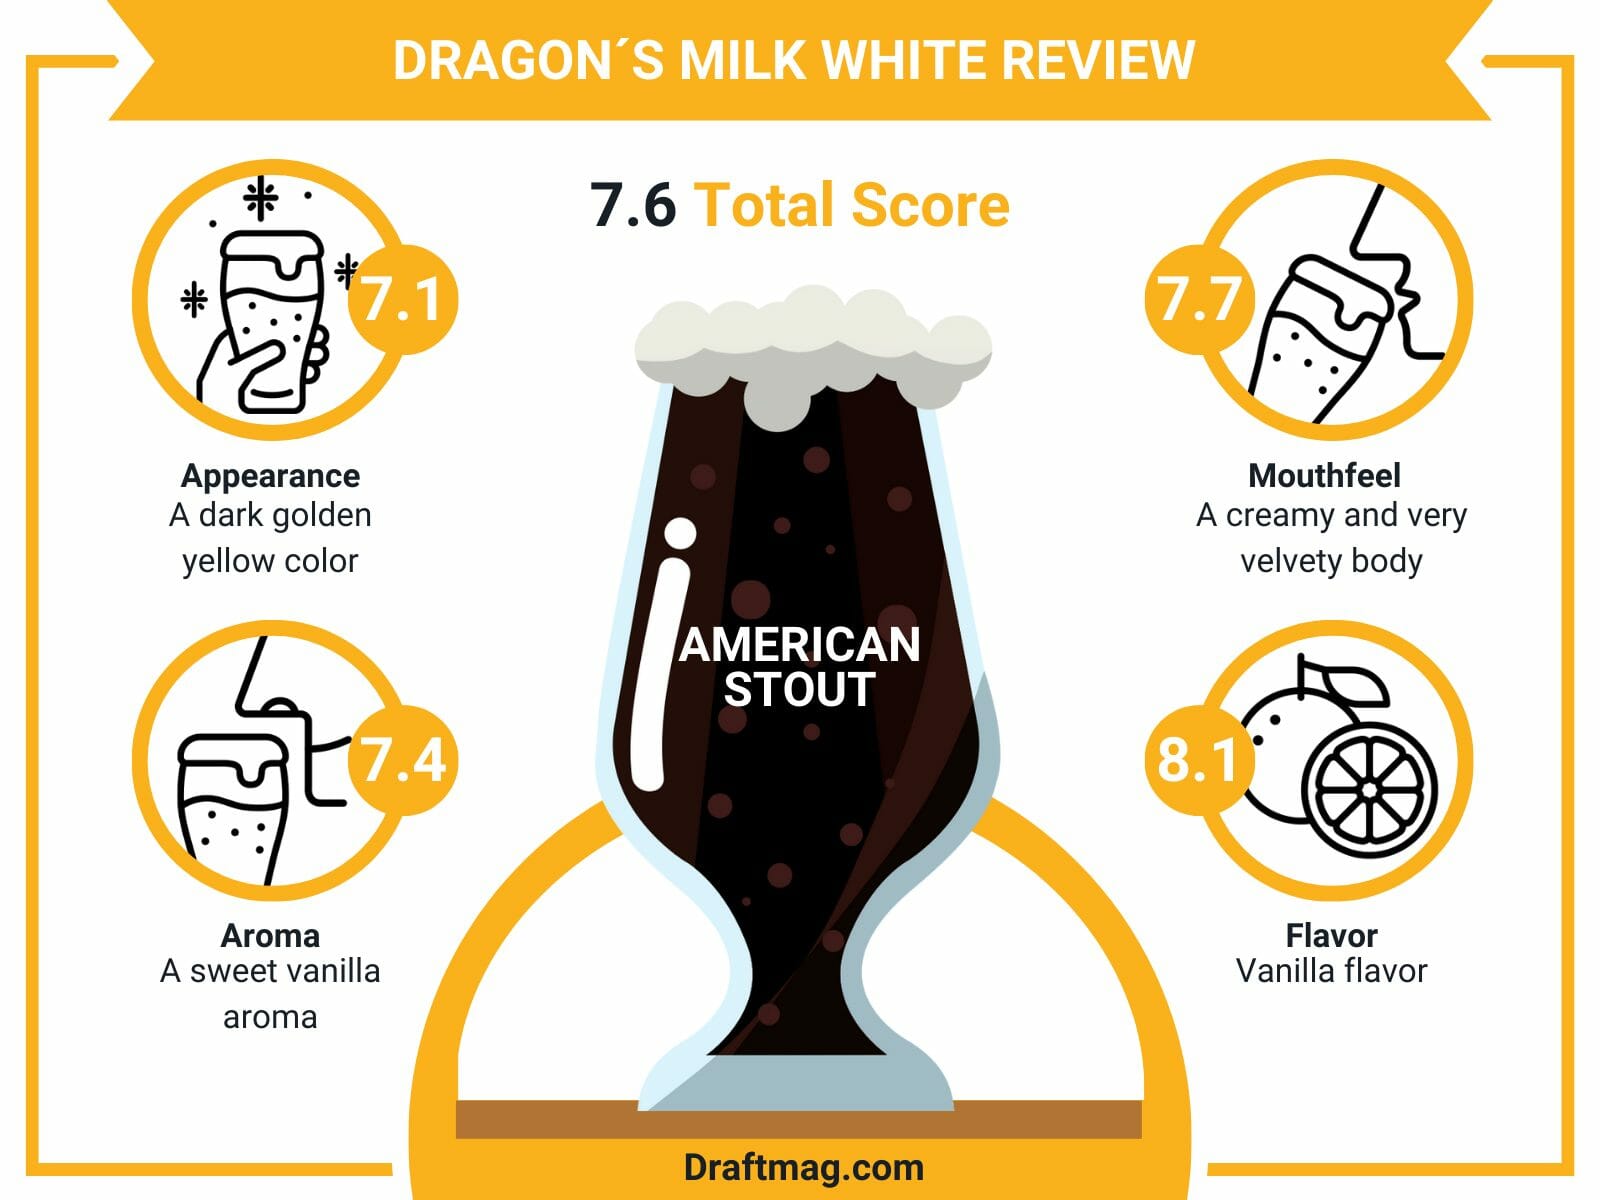 Dragon milk white review infographic